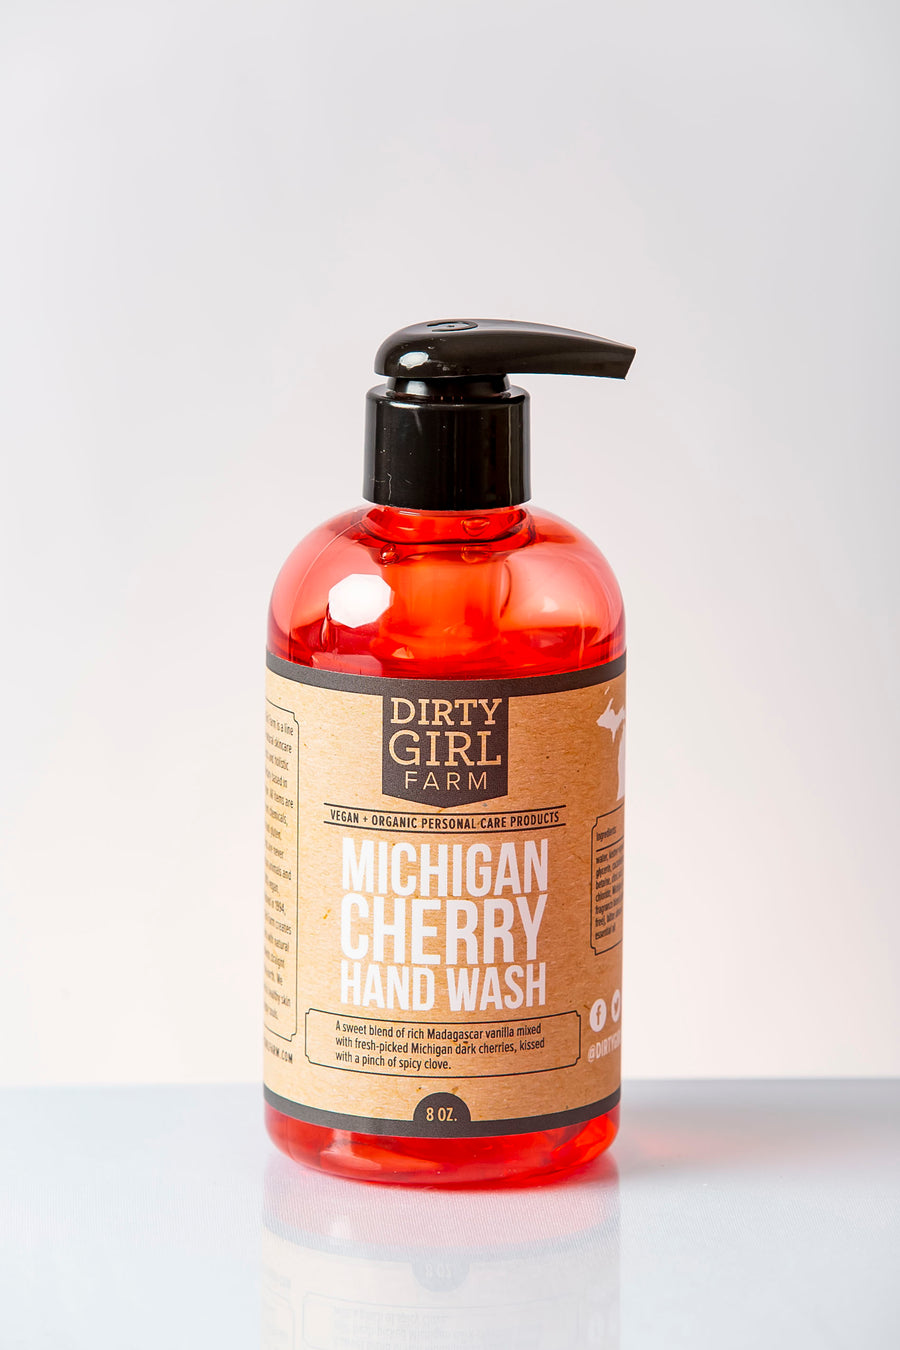 Dirty Girl Farm Michigan Cherry Hand Wash